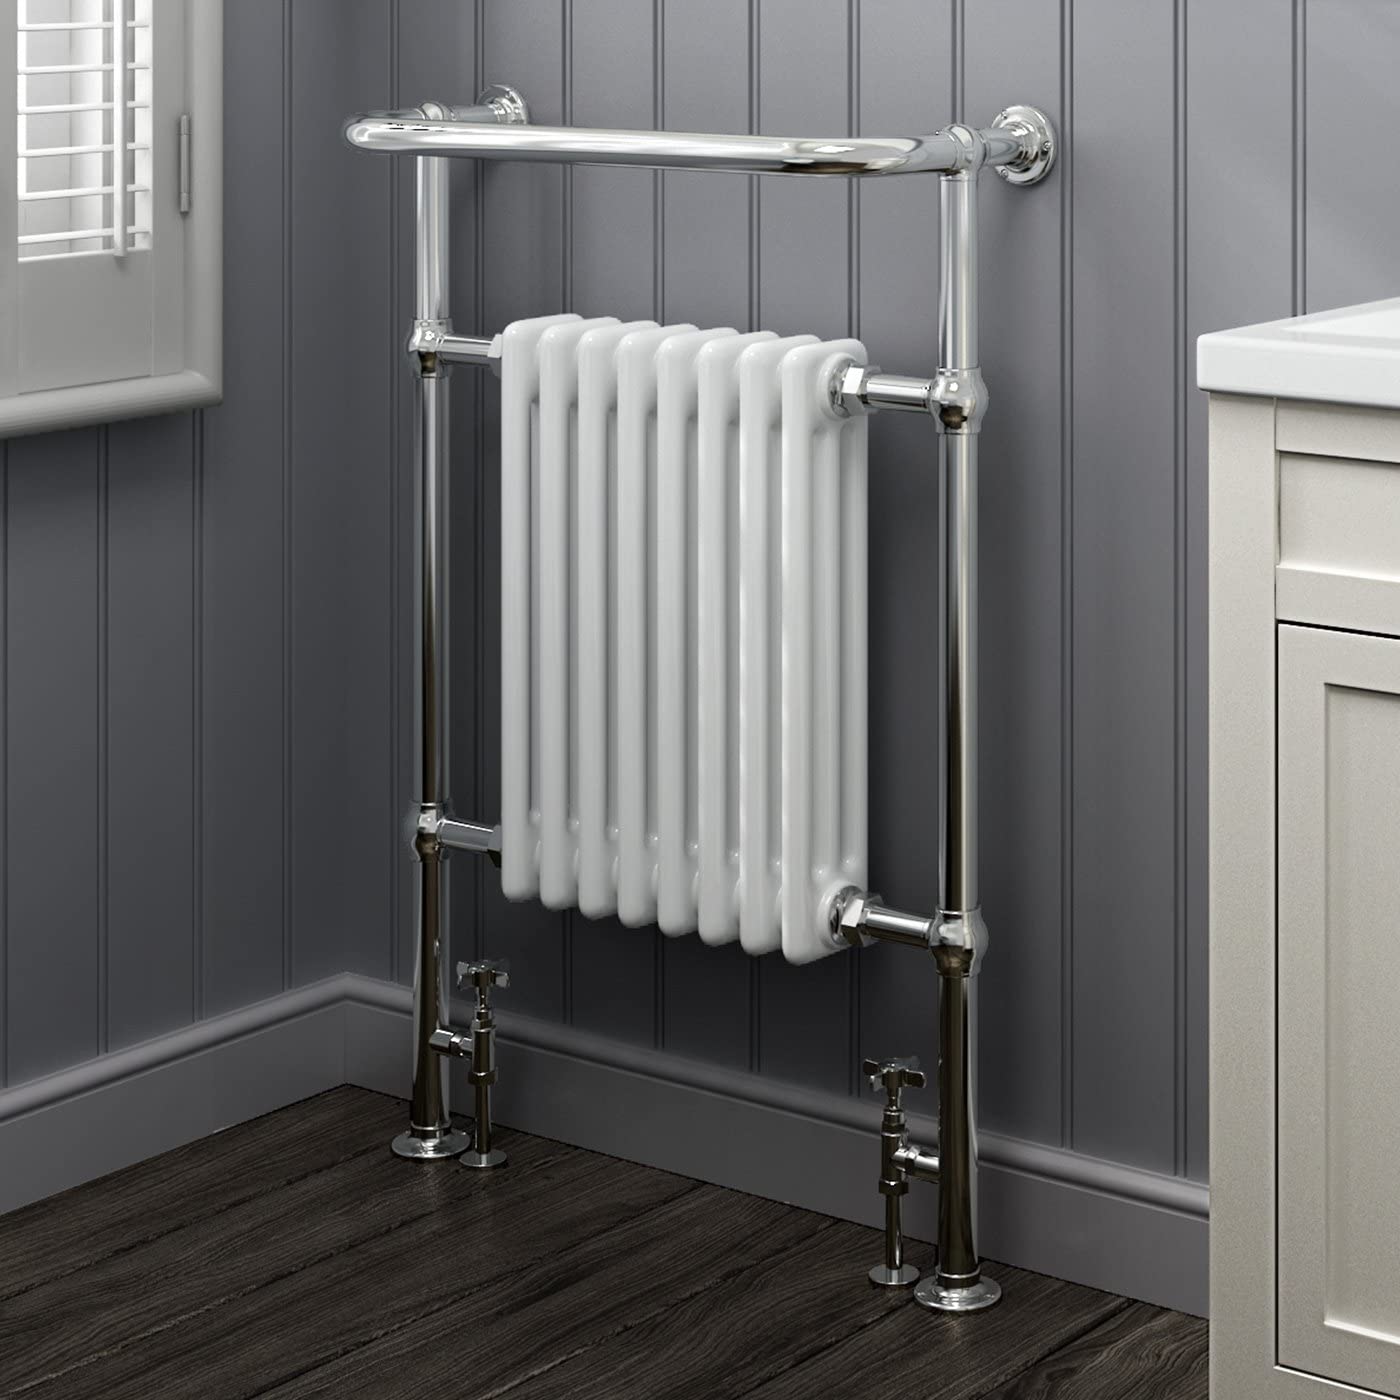 Bathroom4less Heating,Heated Towel Rails,Column Radiators 659mm x 952mm Traditional Vertical Heated Towel Radiator - 4 Column - Chrome&White